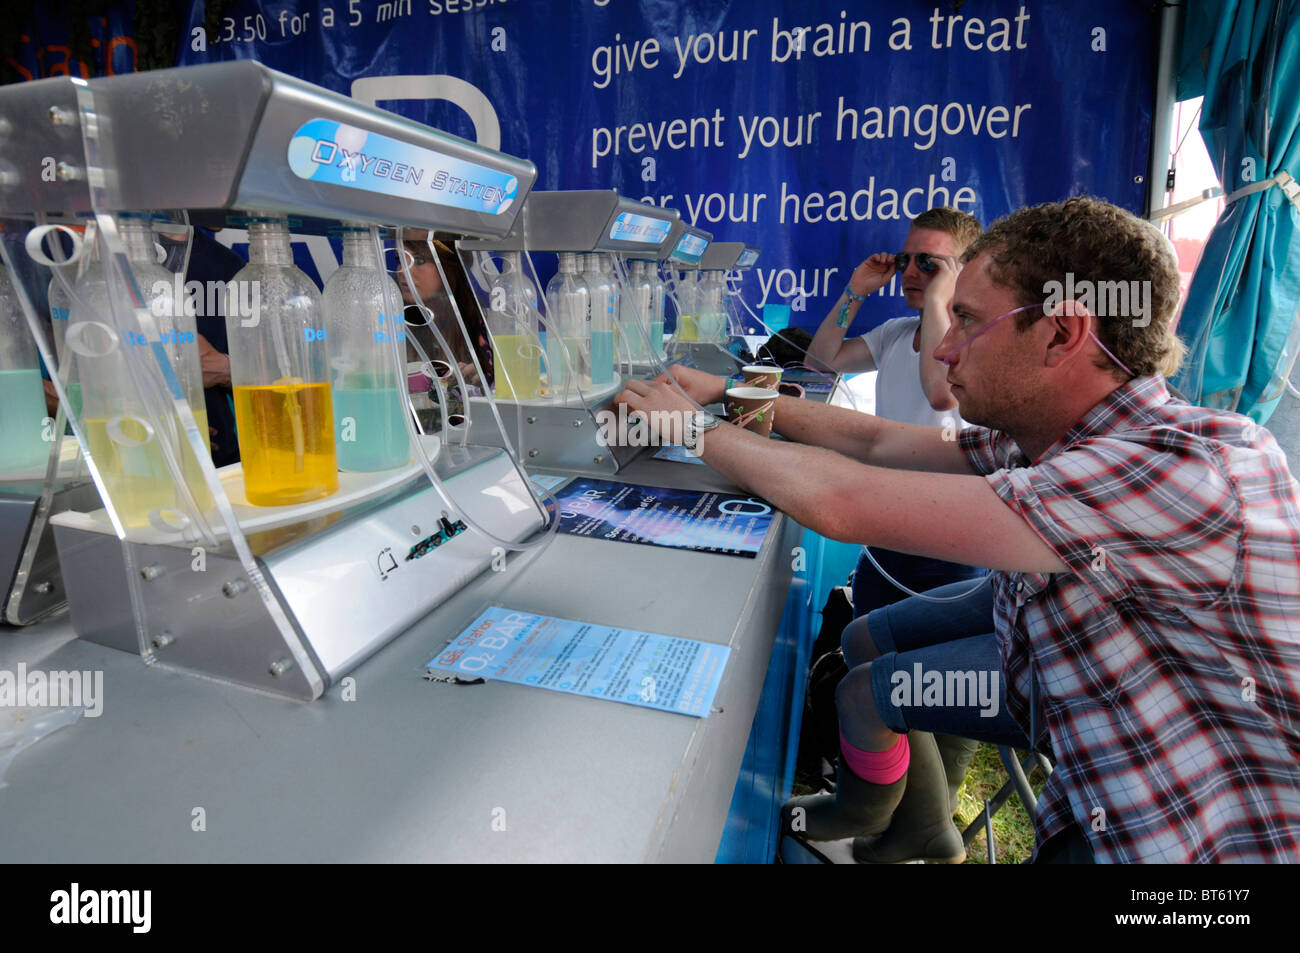 oxygen station therapy facility  event outdoor bar shop air brain hangover headache brain alternive Stock Photo